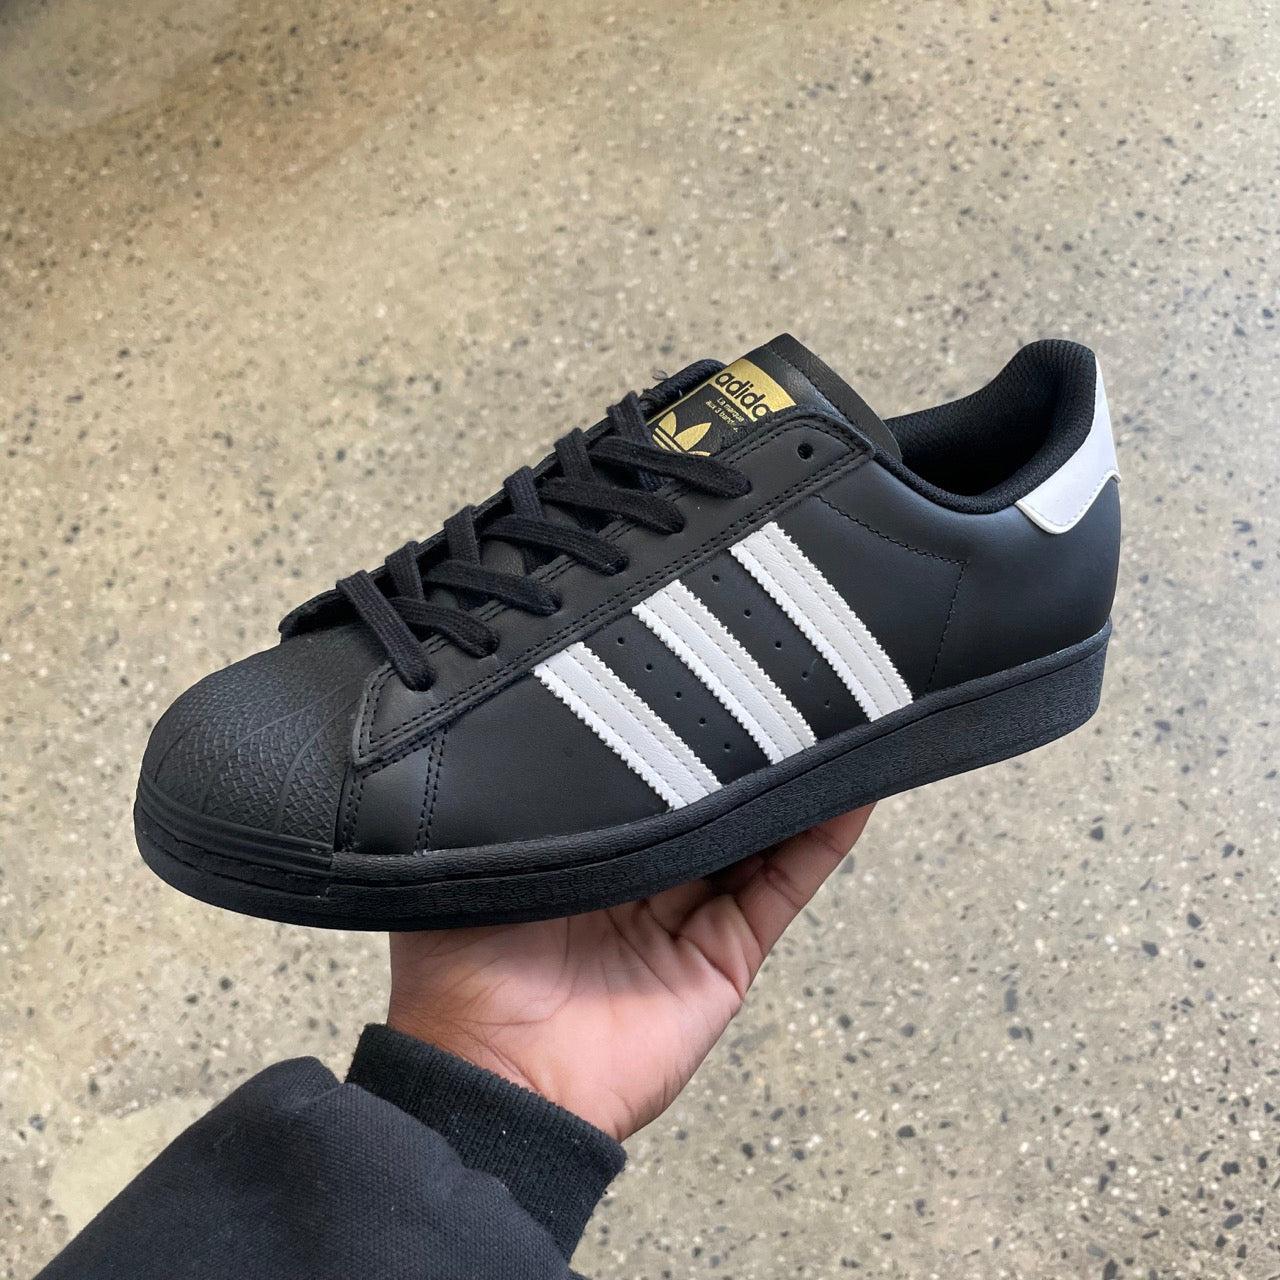 Adidas superstar ADV Black Leather